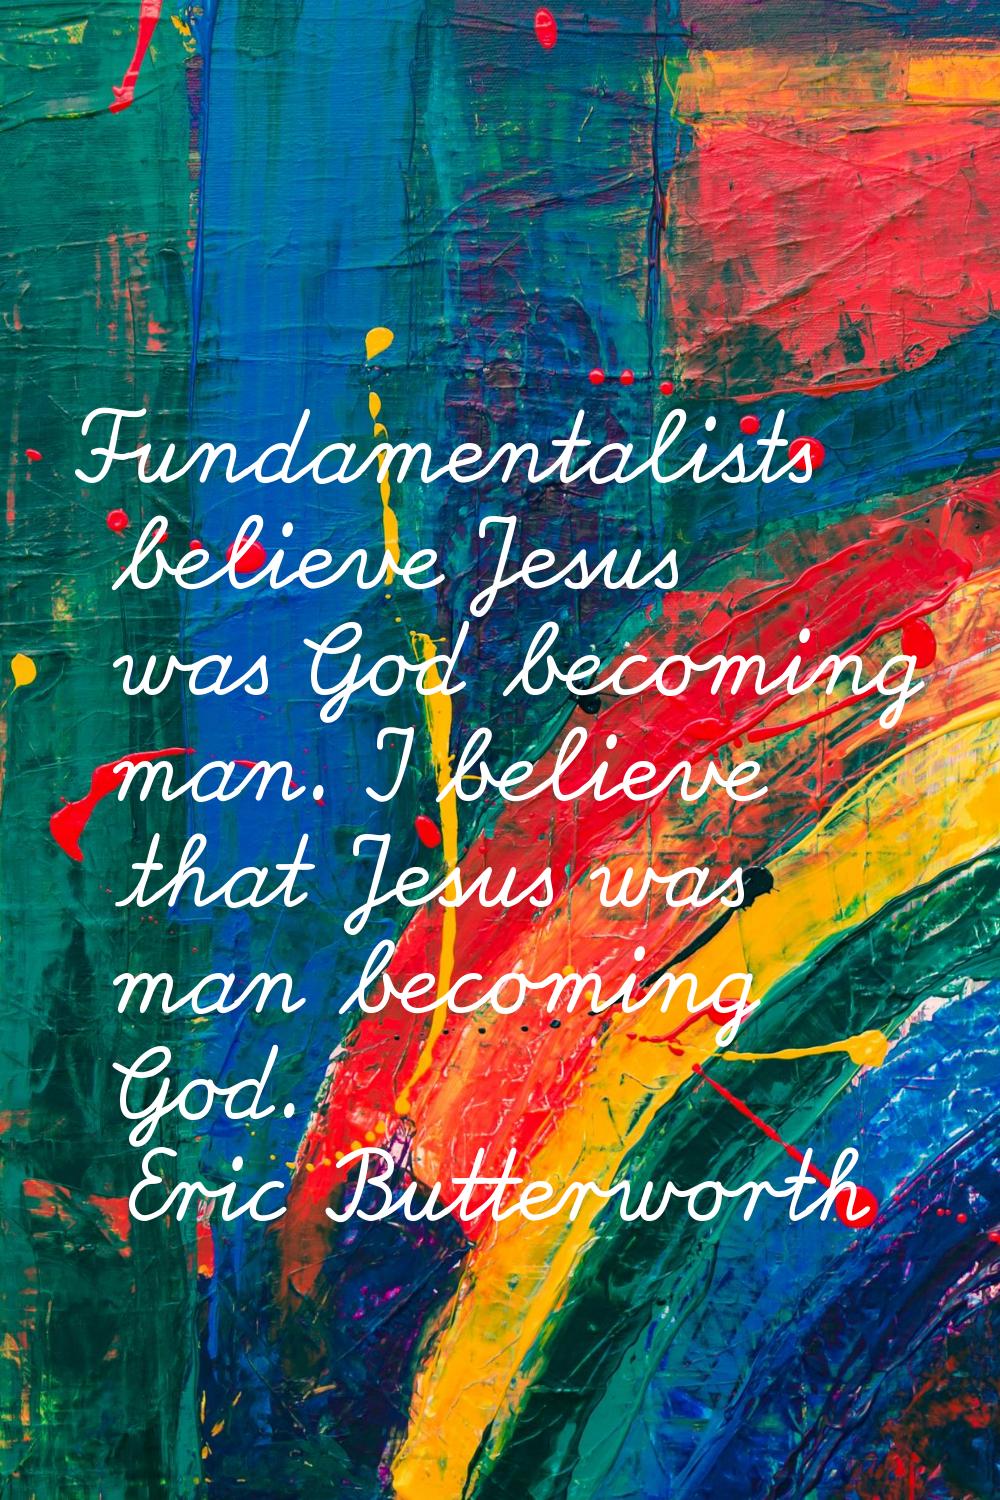 Fundamentalists believe Jesus was God becoming man. I believe that Jesus was man becoming God.